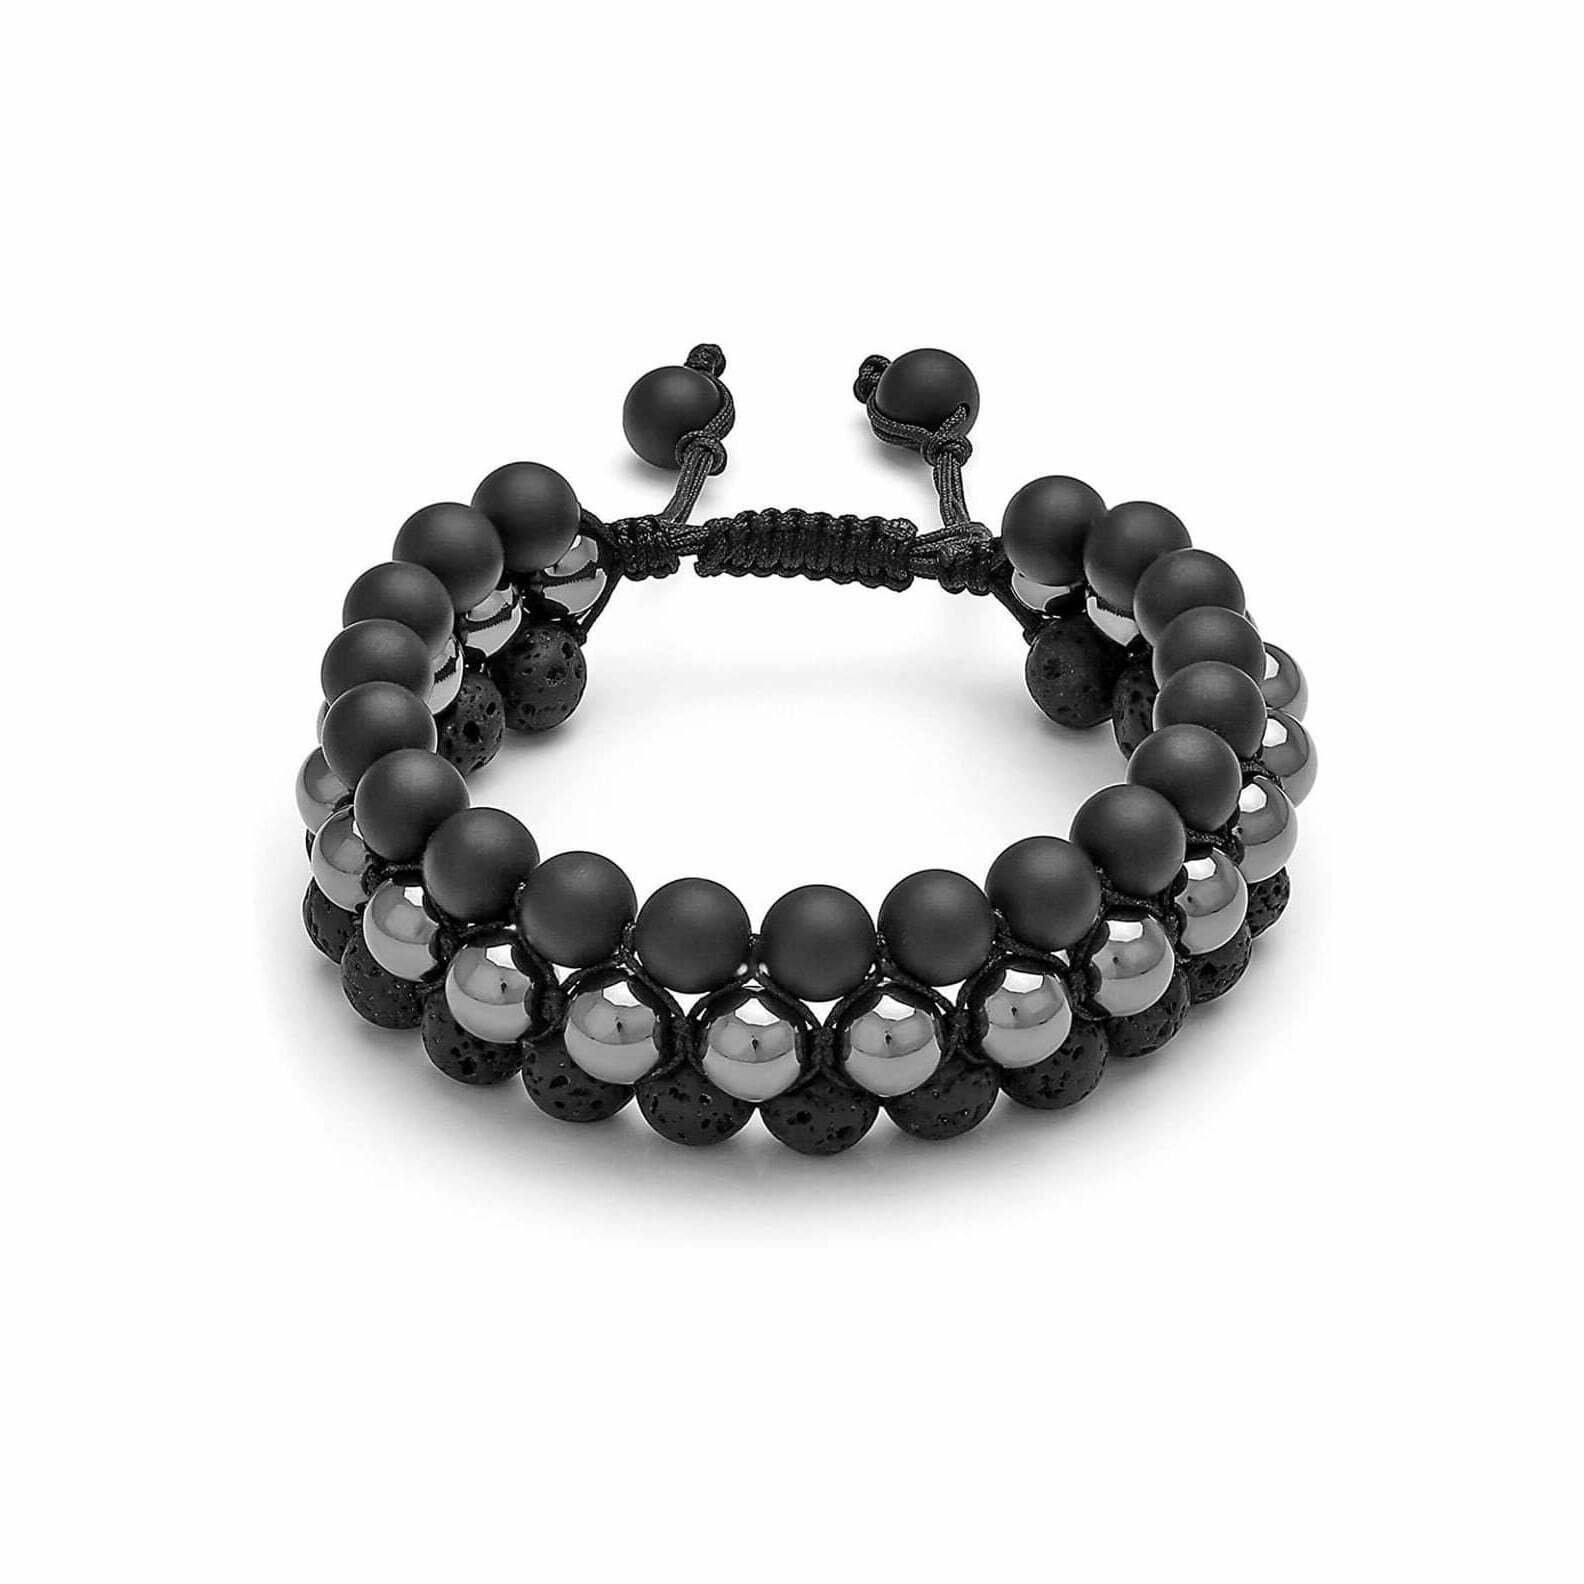 Buy Black Stainless Steel with Black Agate Bracelet Online - Inox Jewelry  India